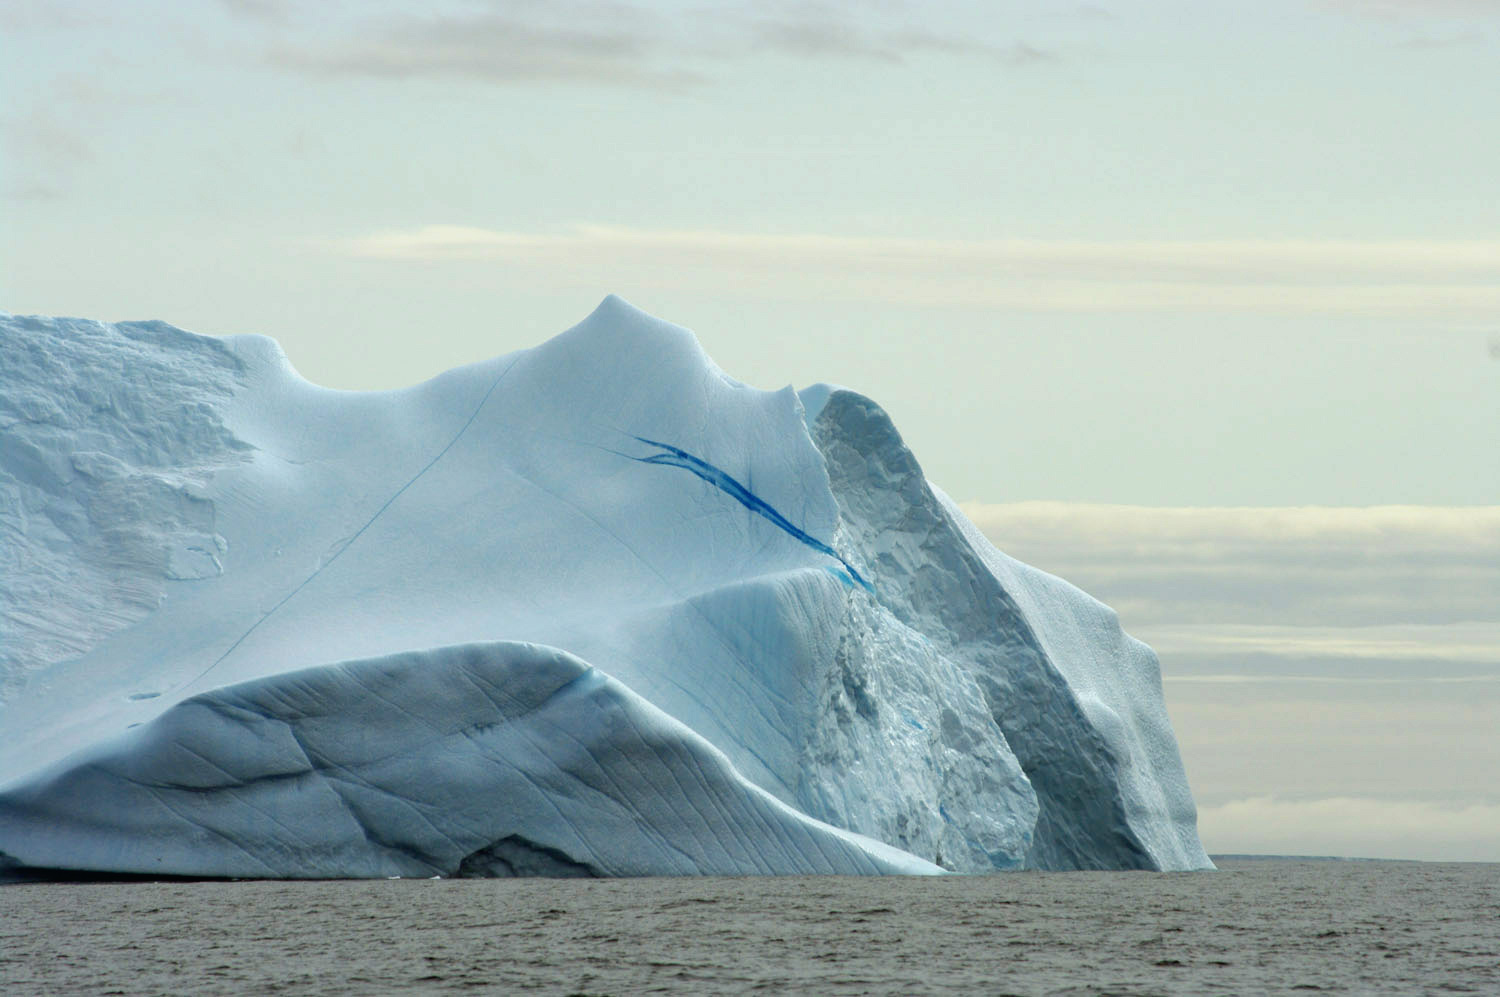 Iceberg 5 - East Greenland, greenland, travel